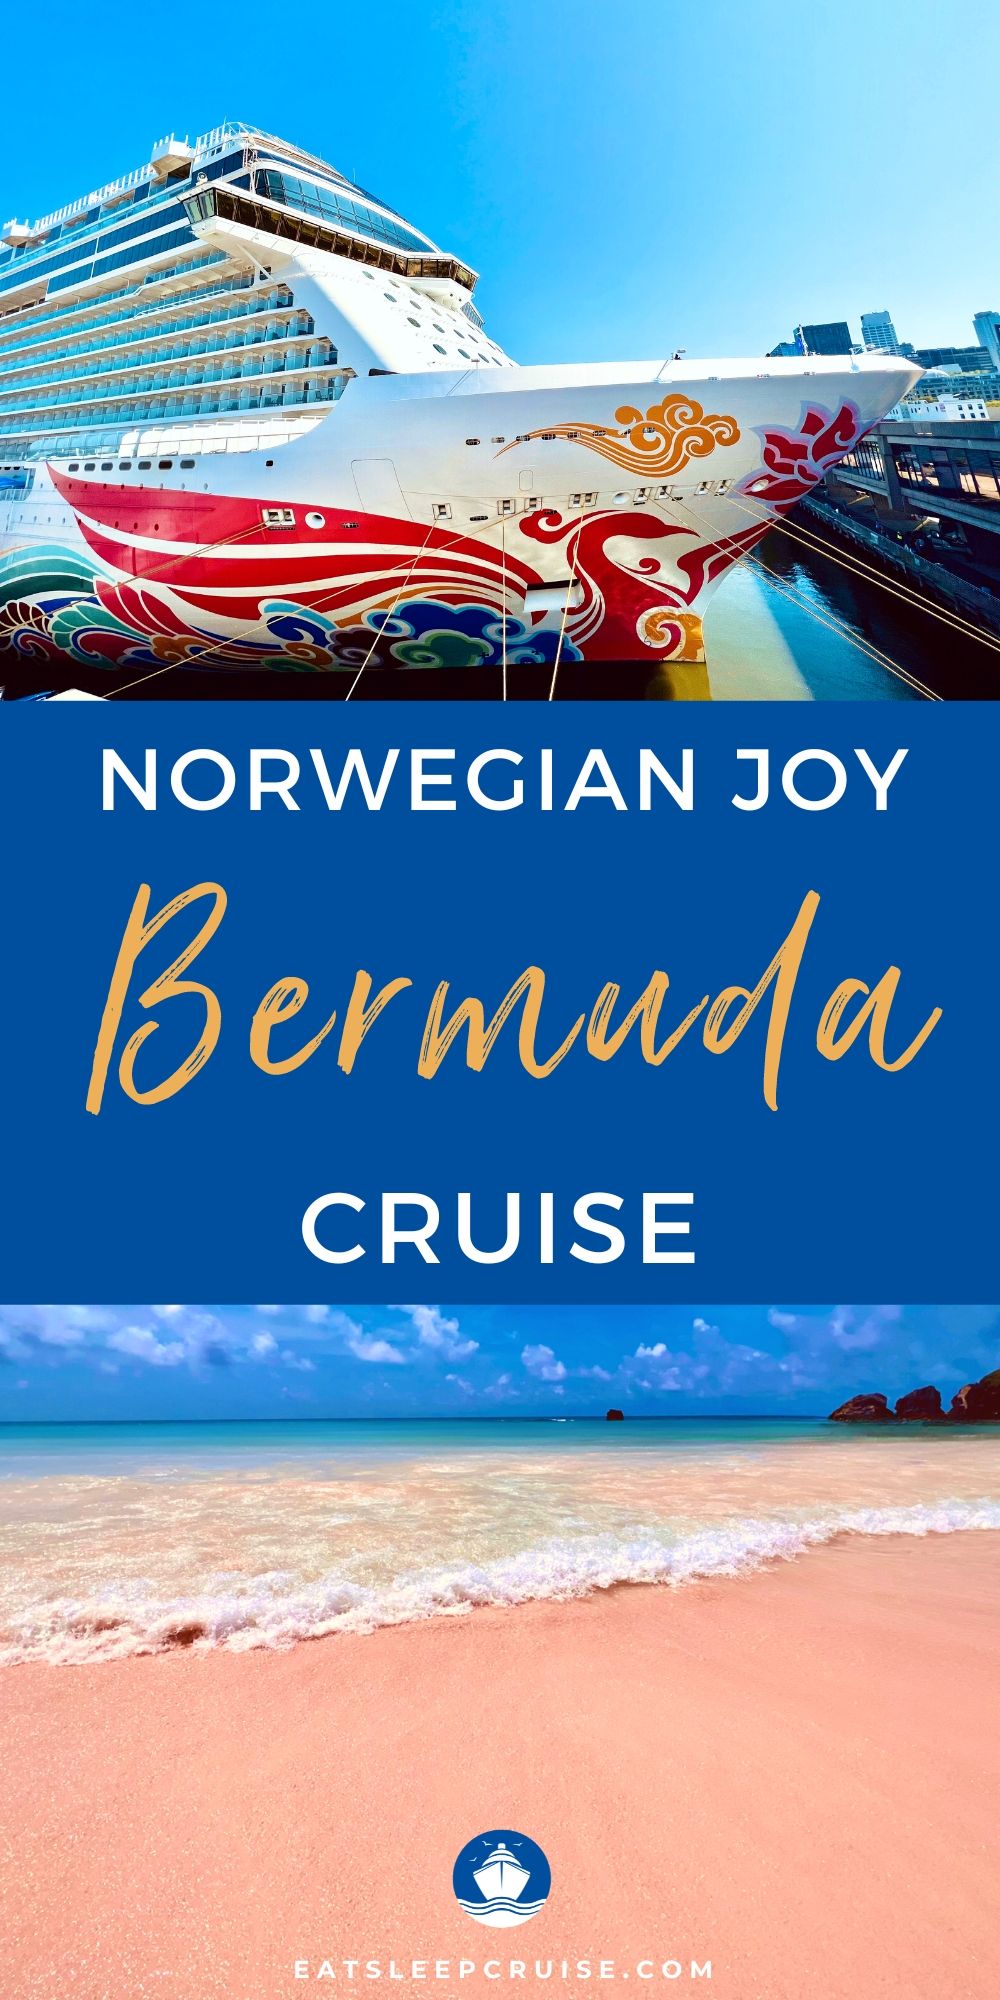 Norwegian Joy cruise to Bermuda